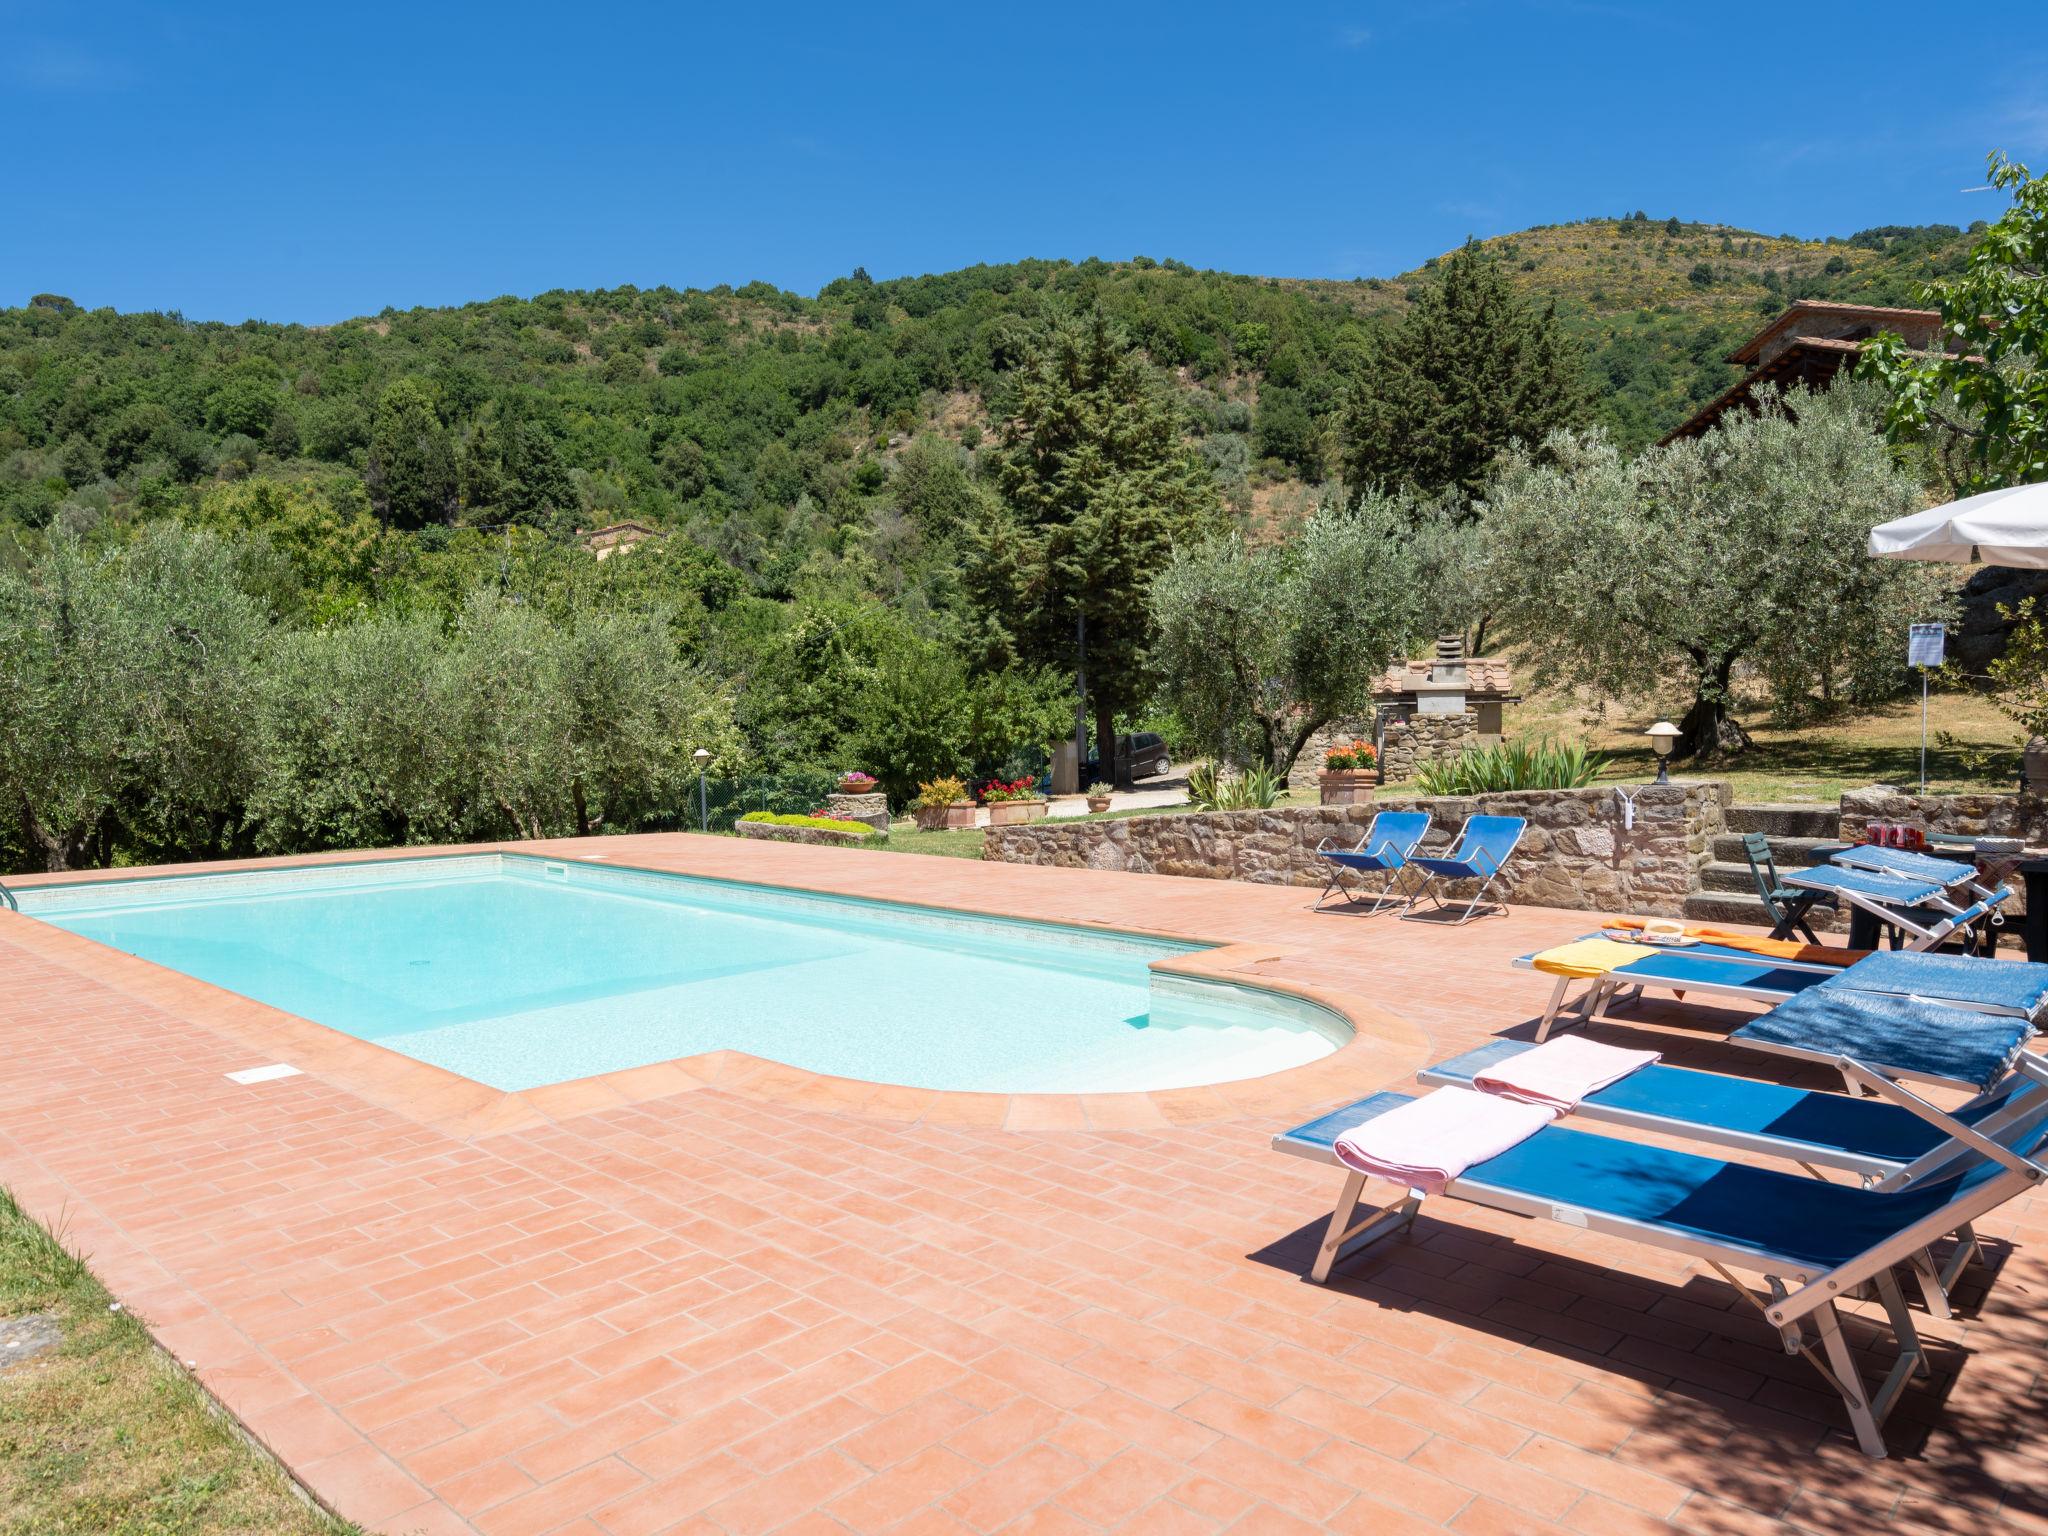 Photo 3 - Maison de 2 chambres à Castiglion Fiorentino avec piscine privée et terrasse